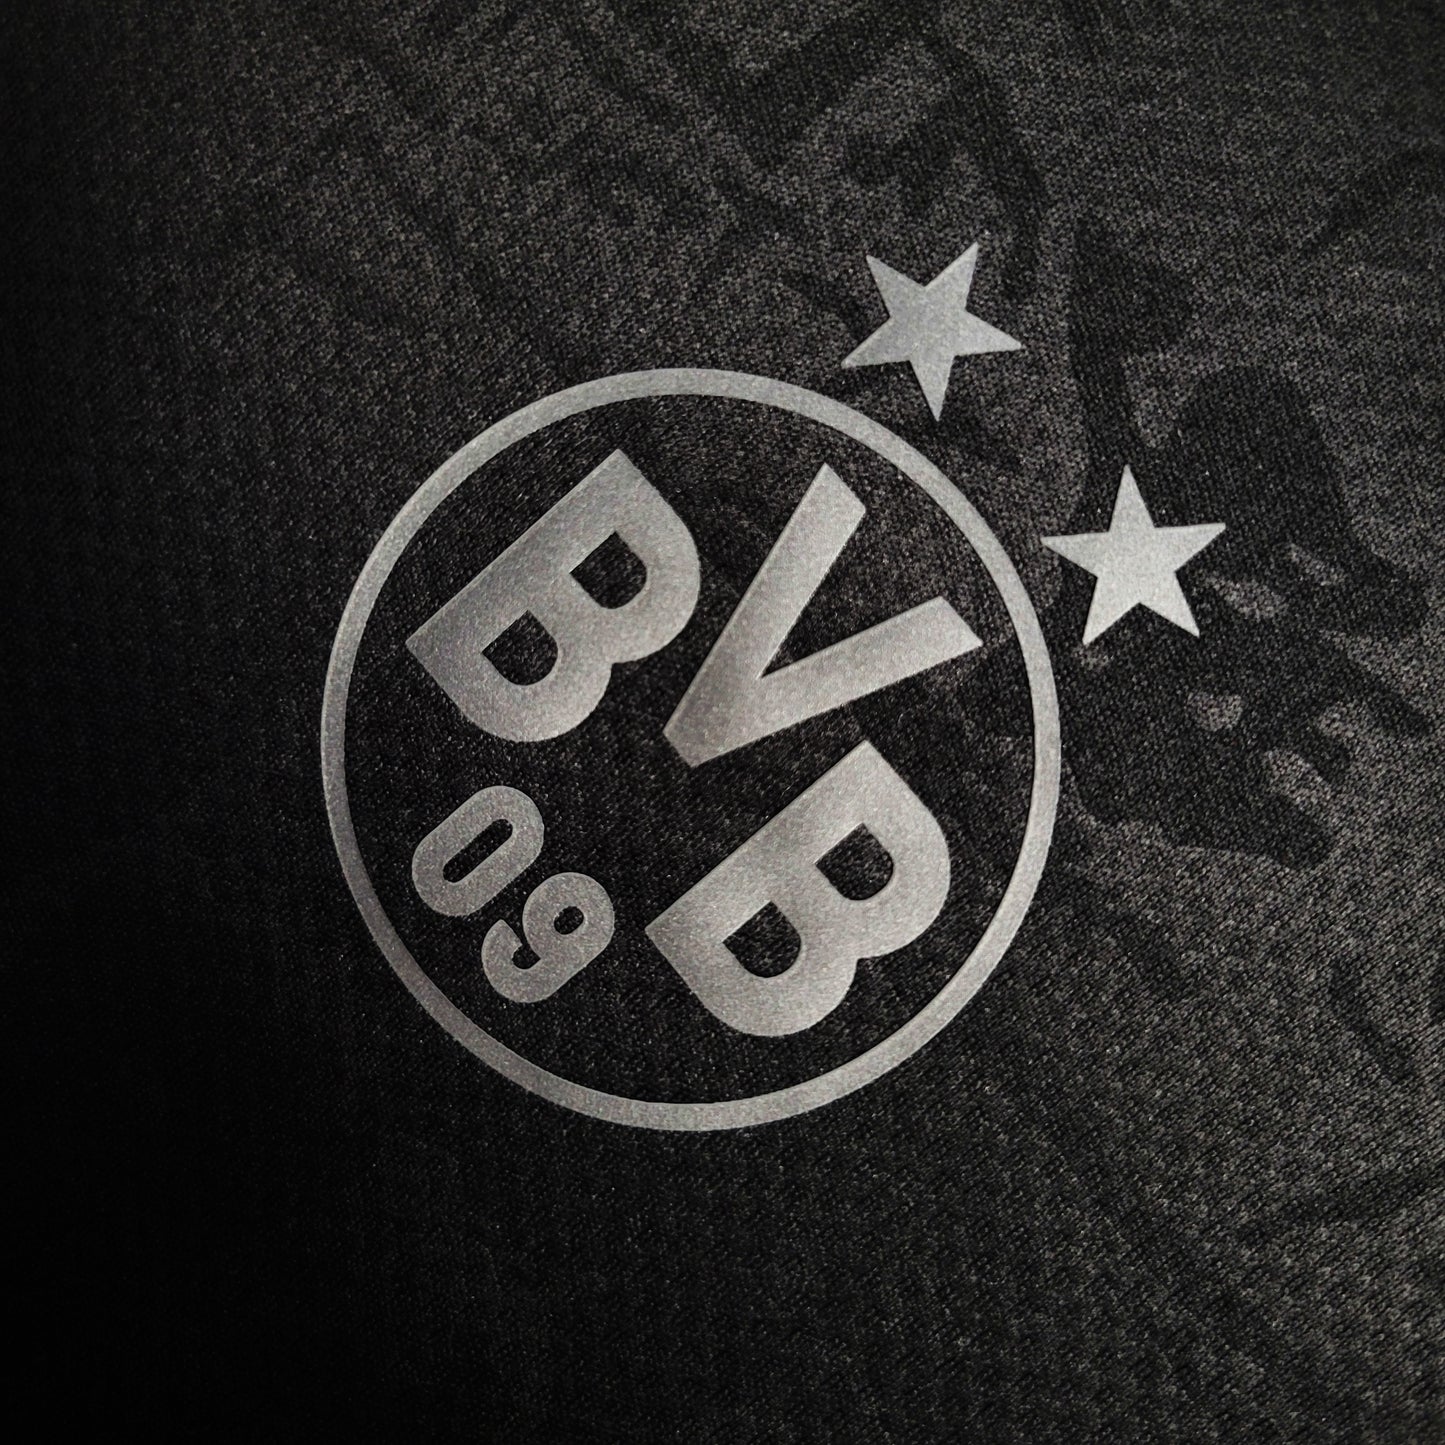 Camisa Torcedor Borussia Dortmund All Black 23/24